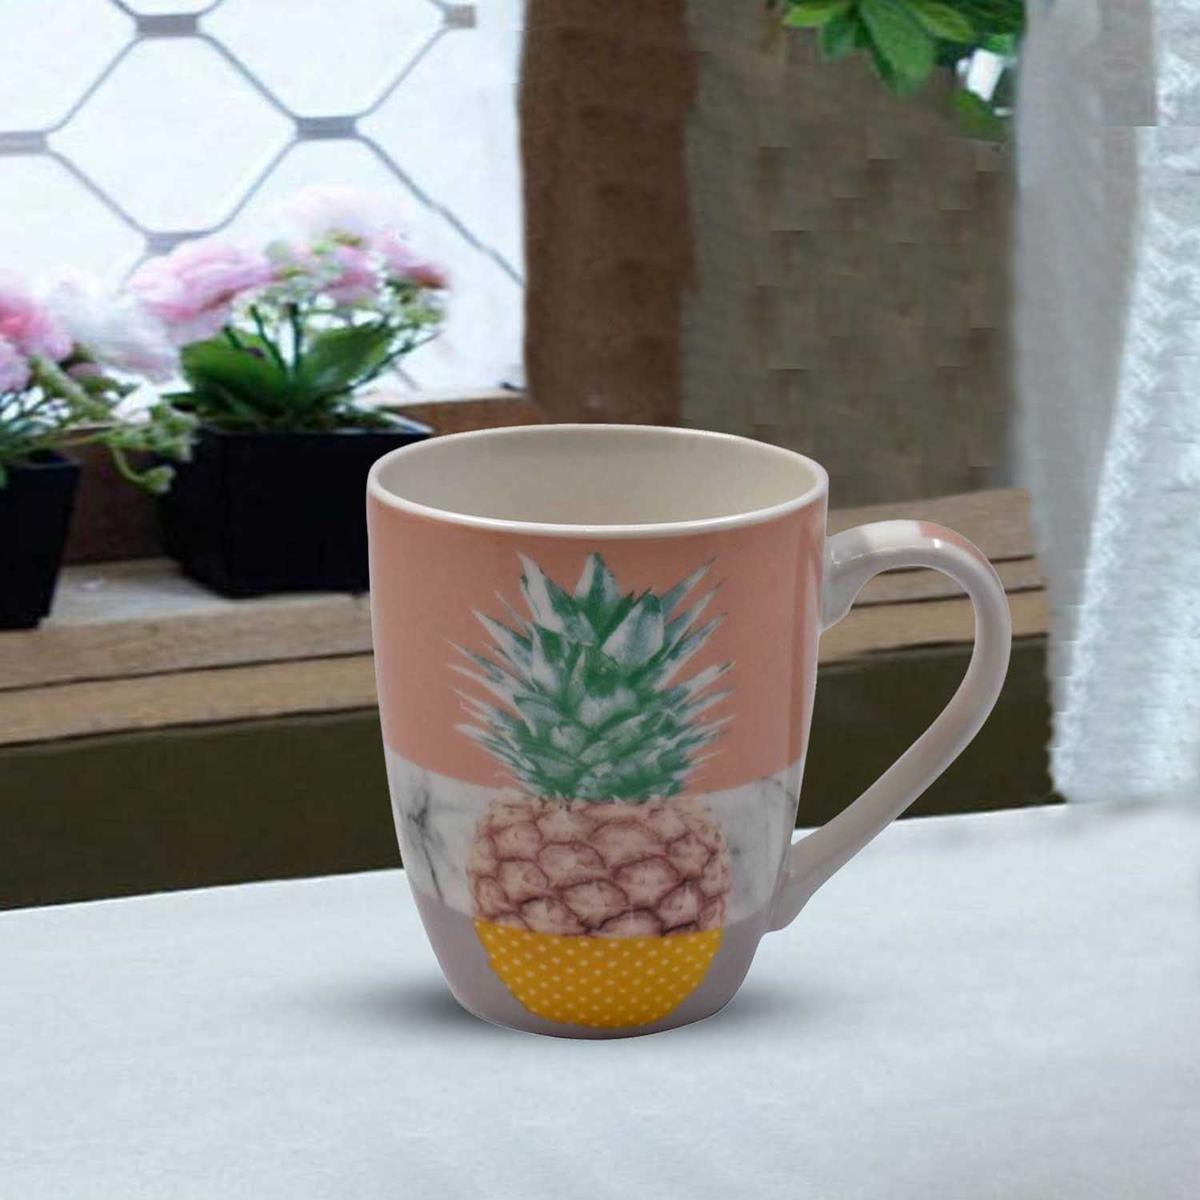 Printed Ceramic Coffee or Tea Mug with handle - 325ml (3551-C)